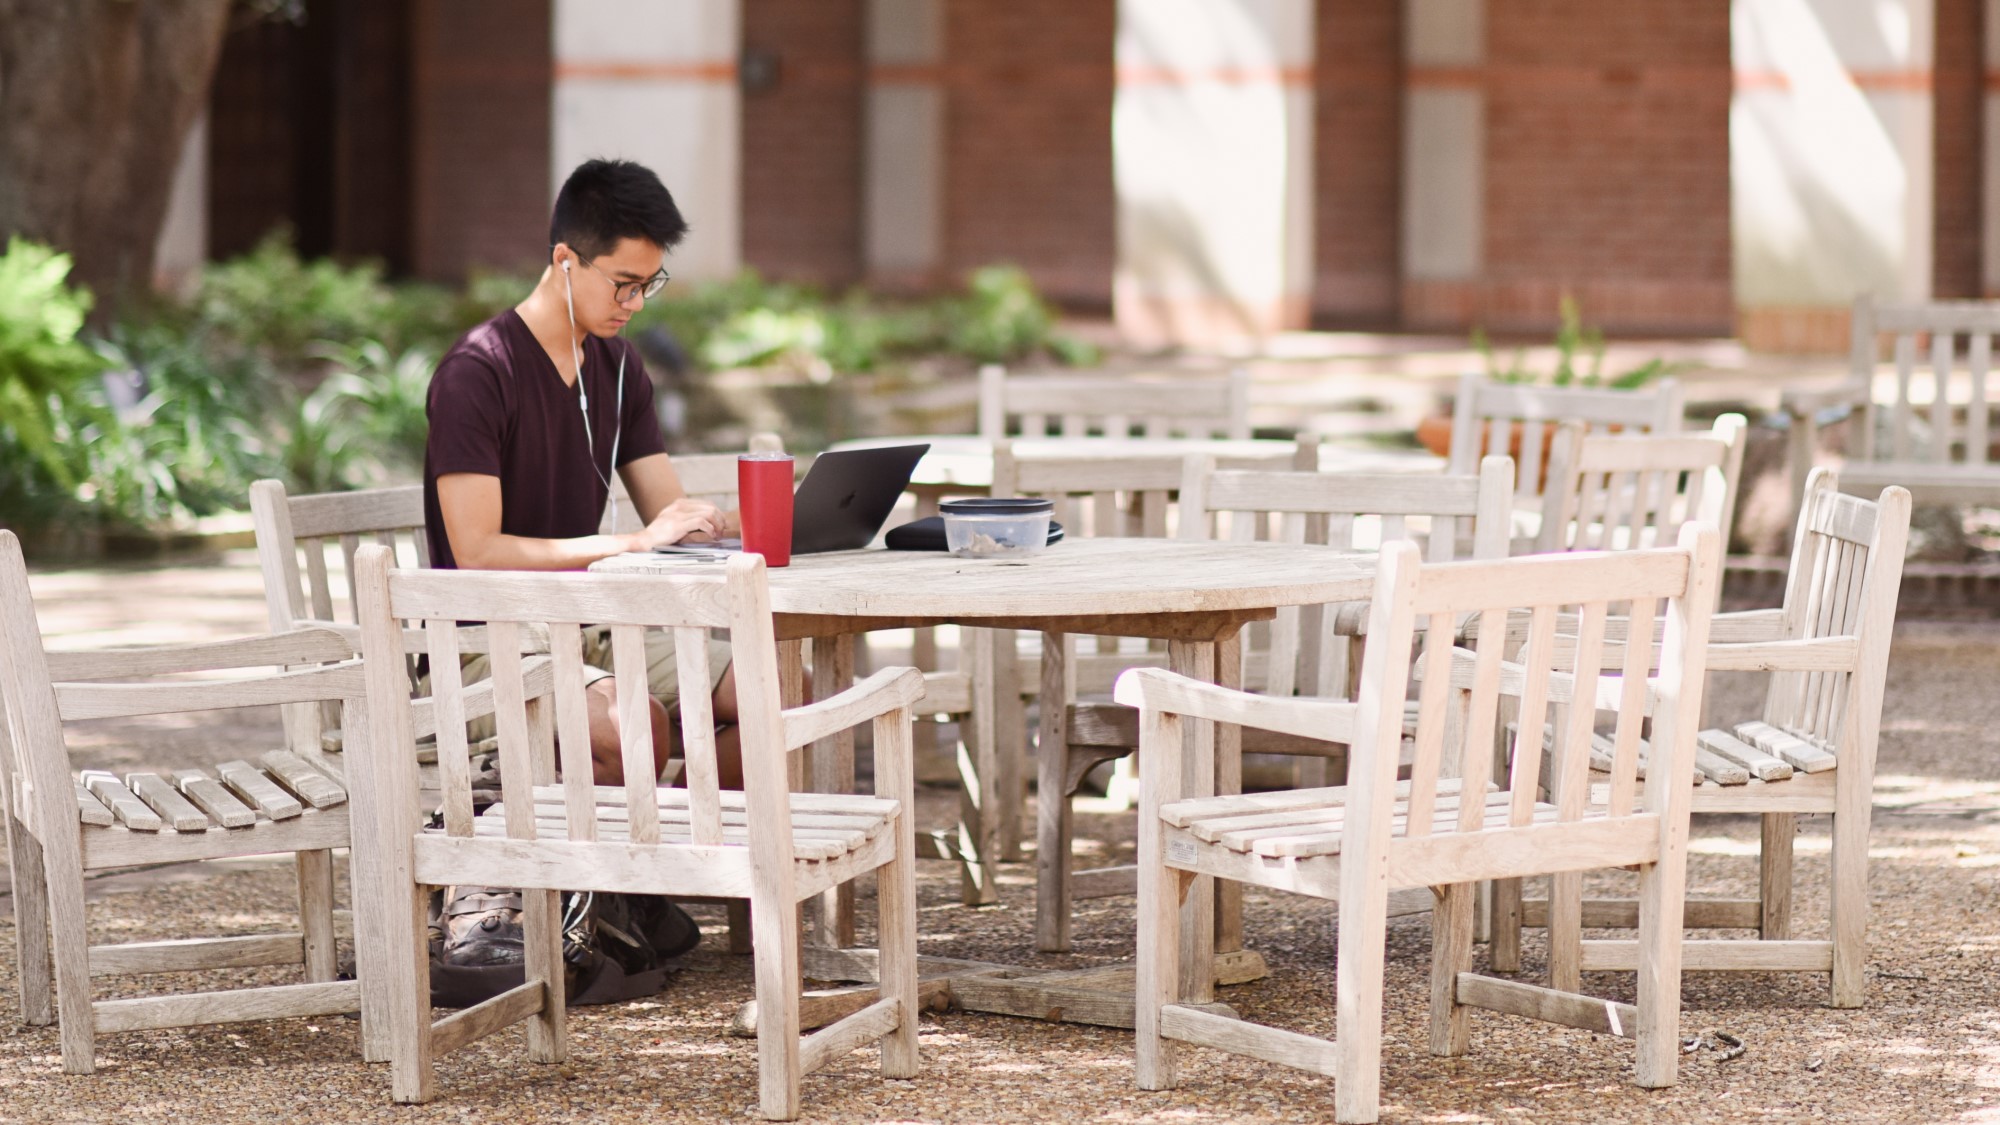 Top Ranked Online MBA Rice University